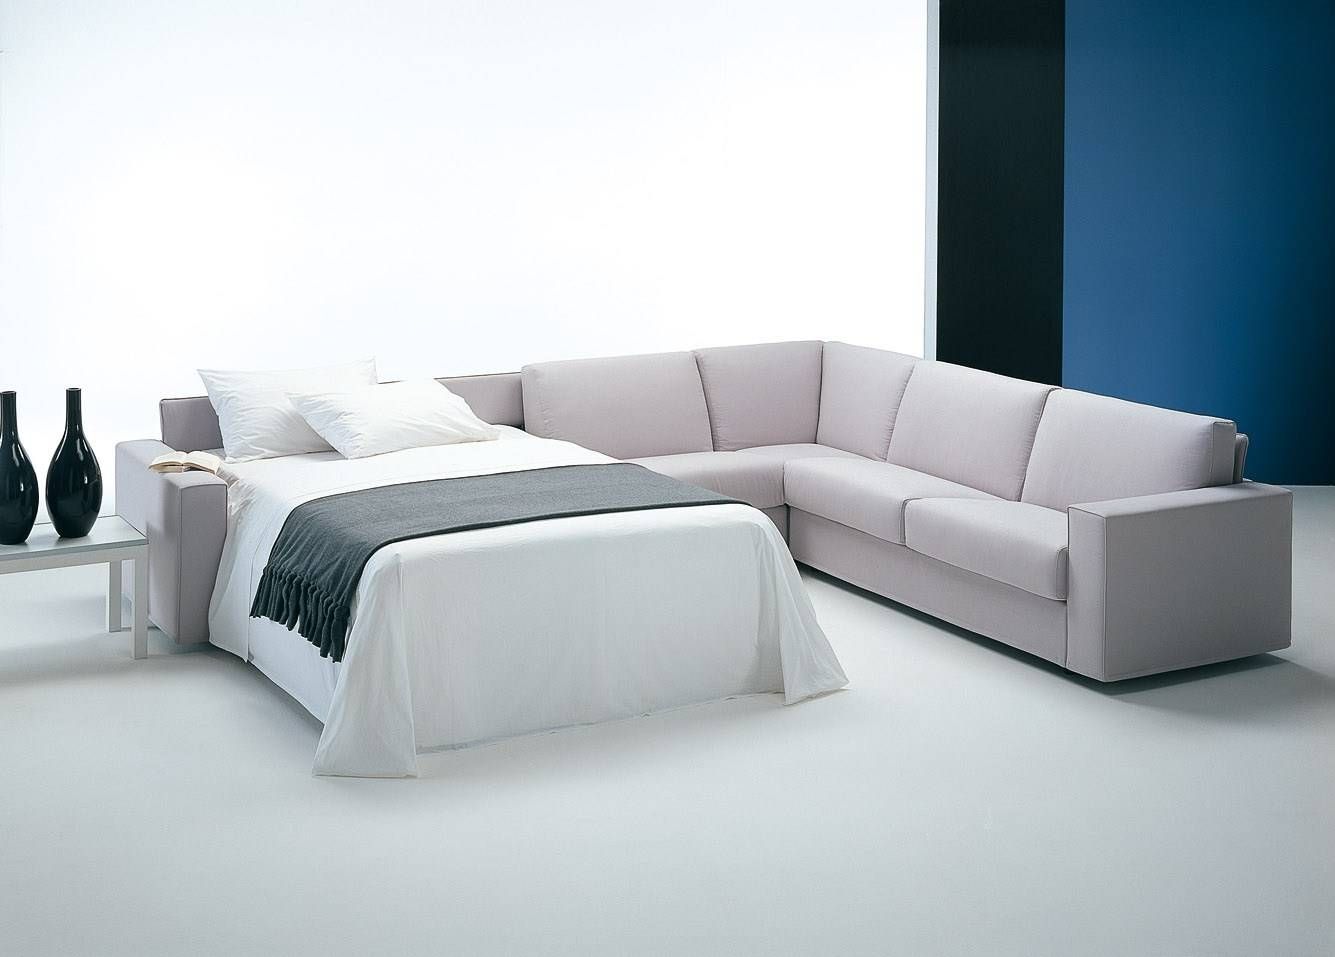 giant malaysia sofa bed